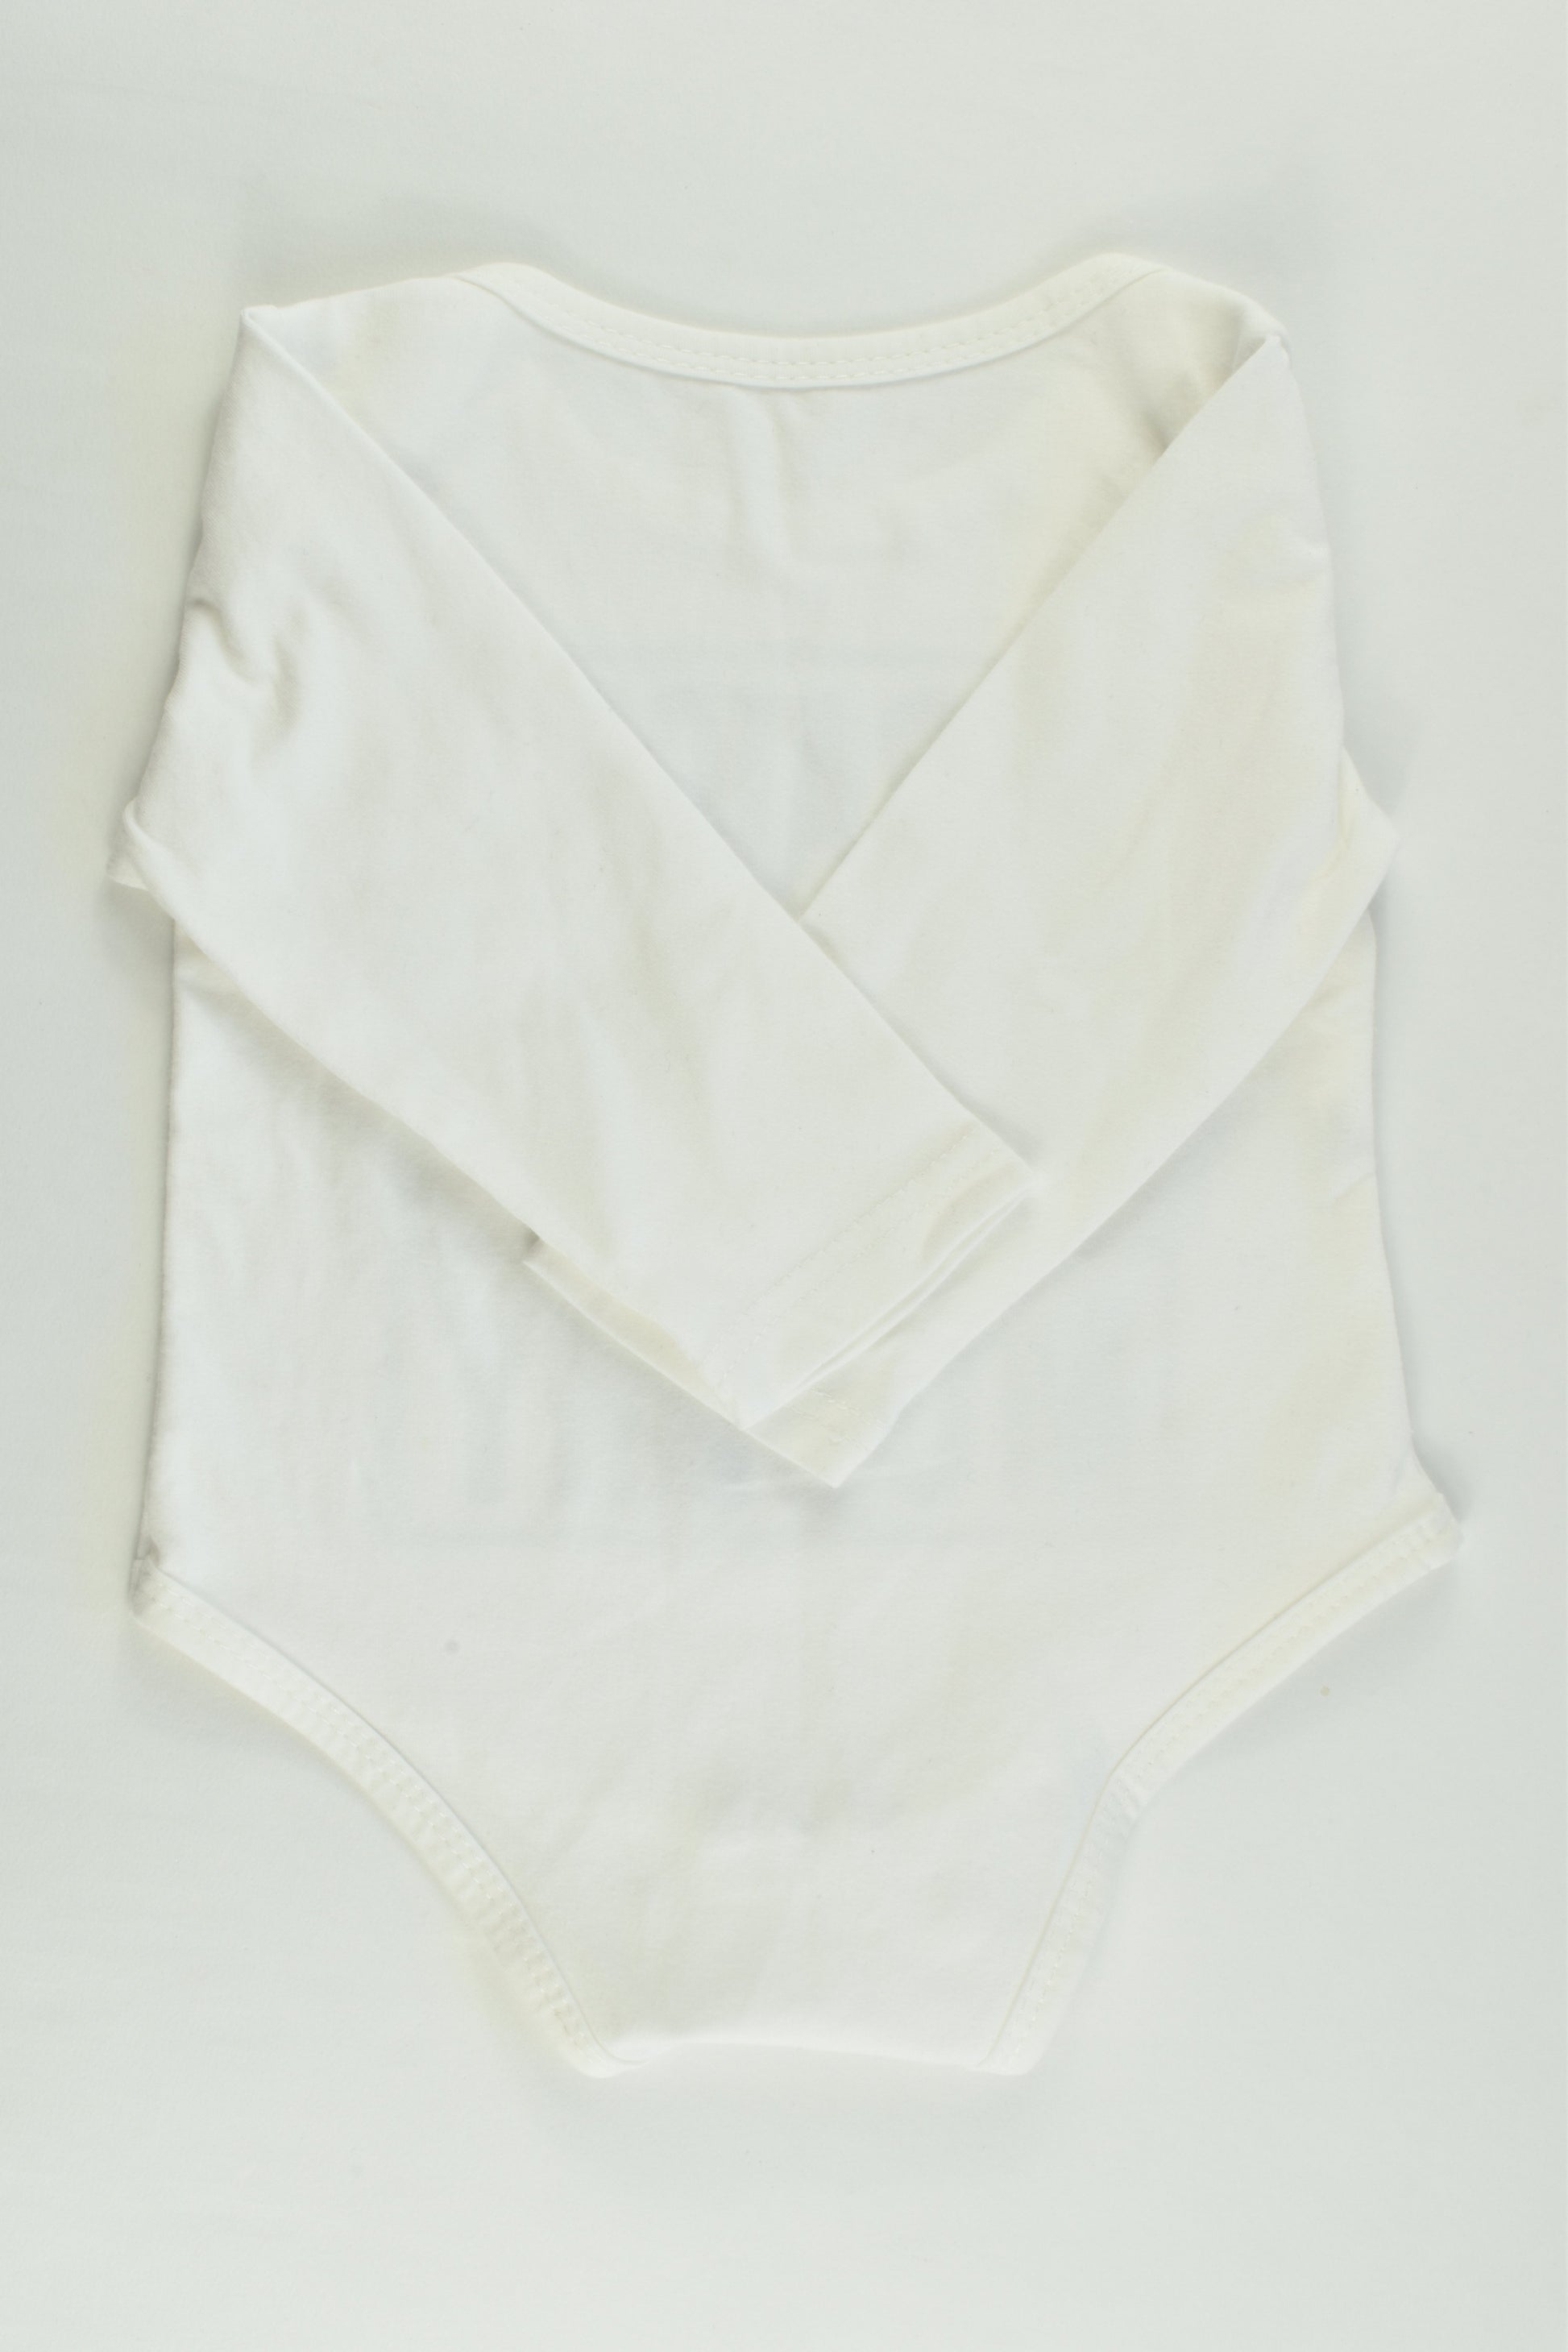 Brand Unknown Size approx 0 'Straight Outta Mummy' Bodysuit